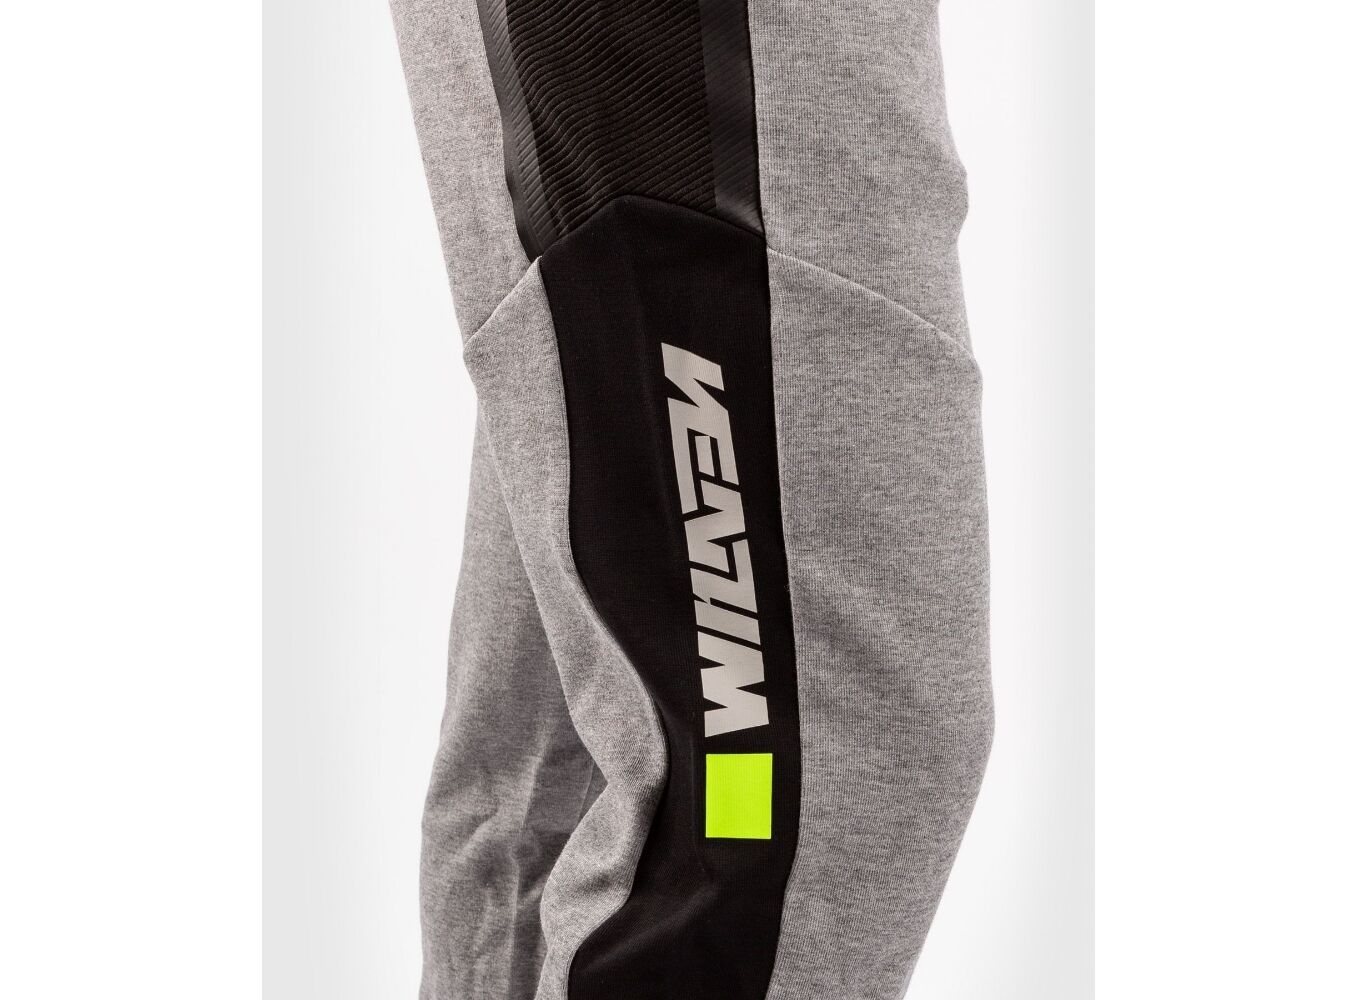 Venum Laser Evo Jogging Pants - XL - Black